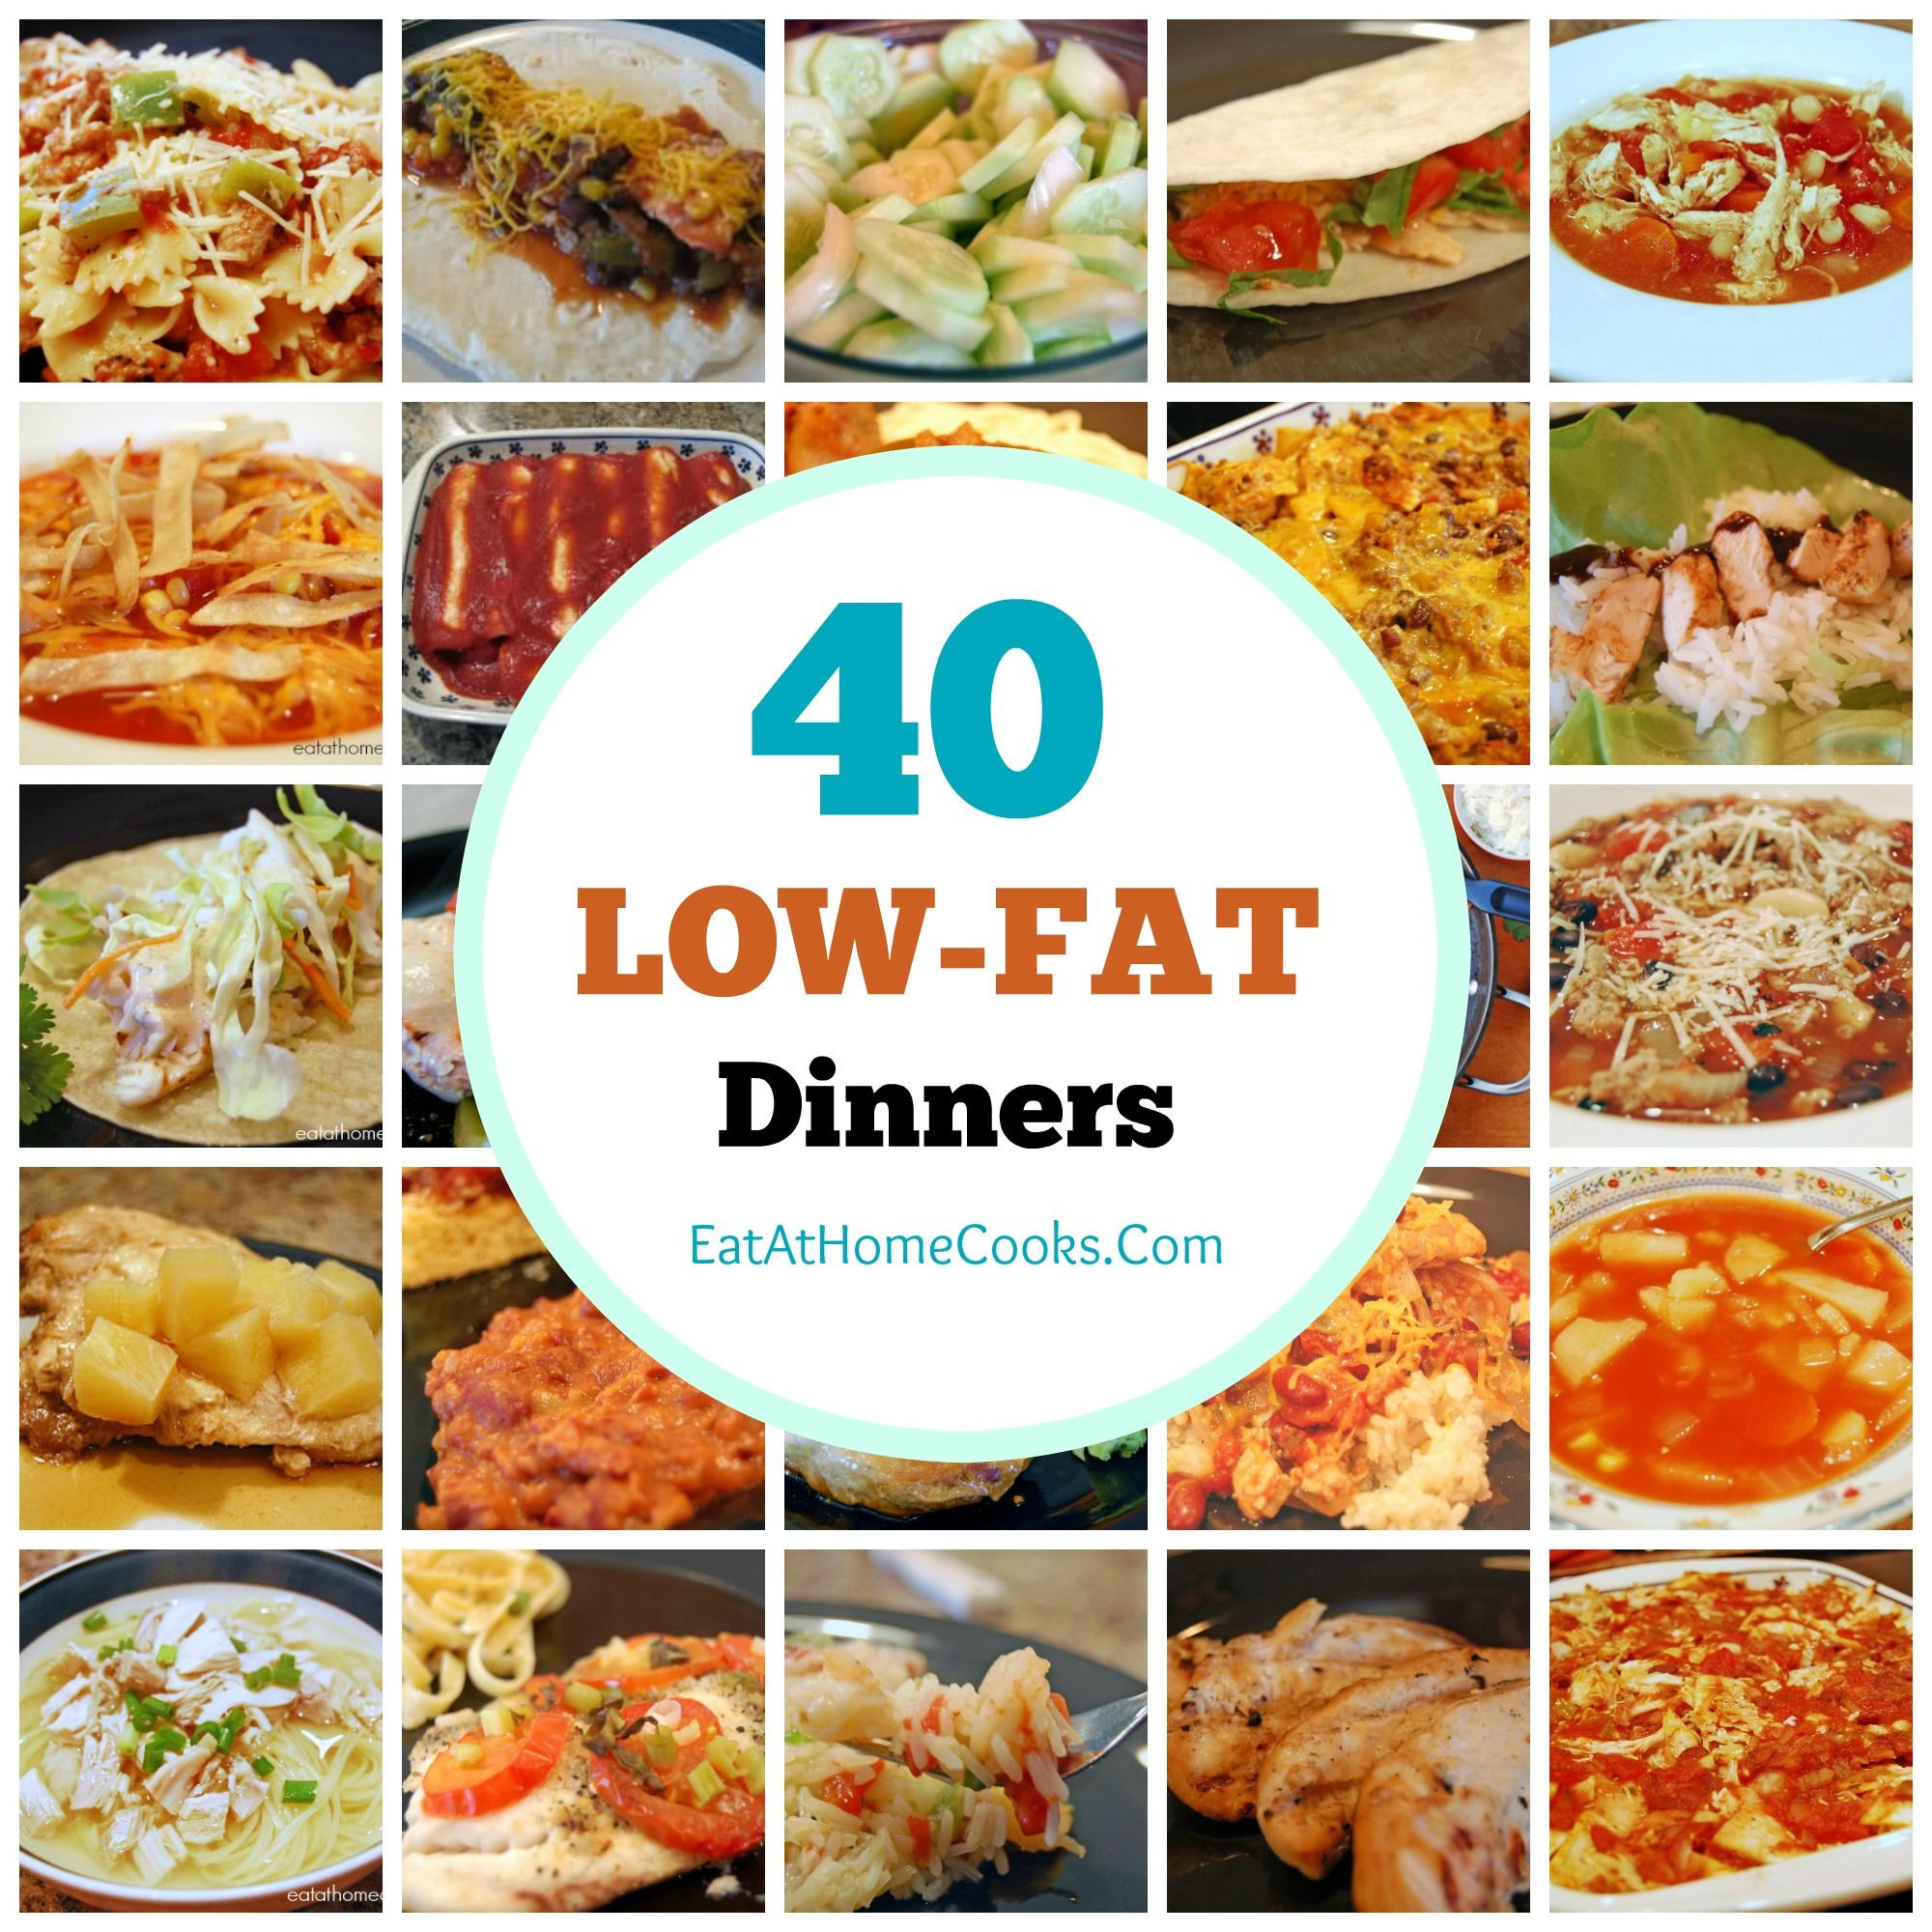 Low Fat Diet Recipes Luxury Cholesterol Free Recipes for Dinner Vegan Pasta Bake